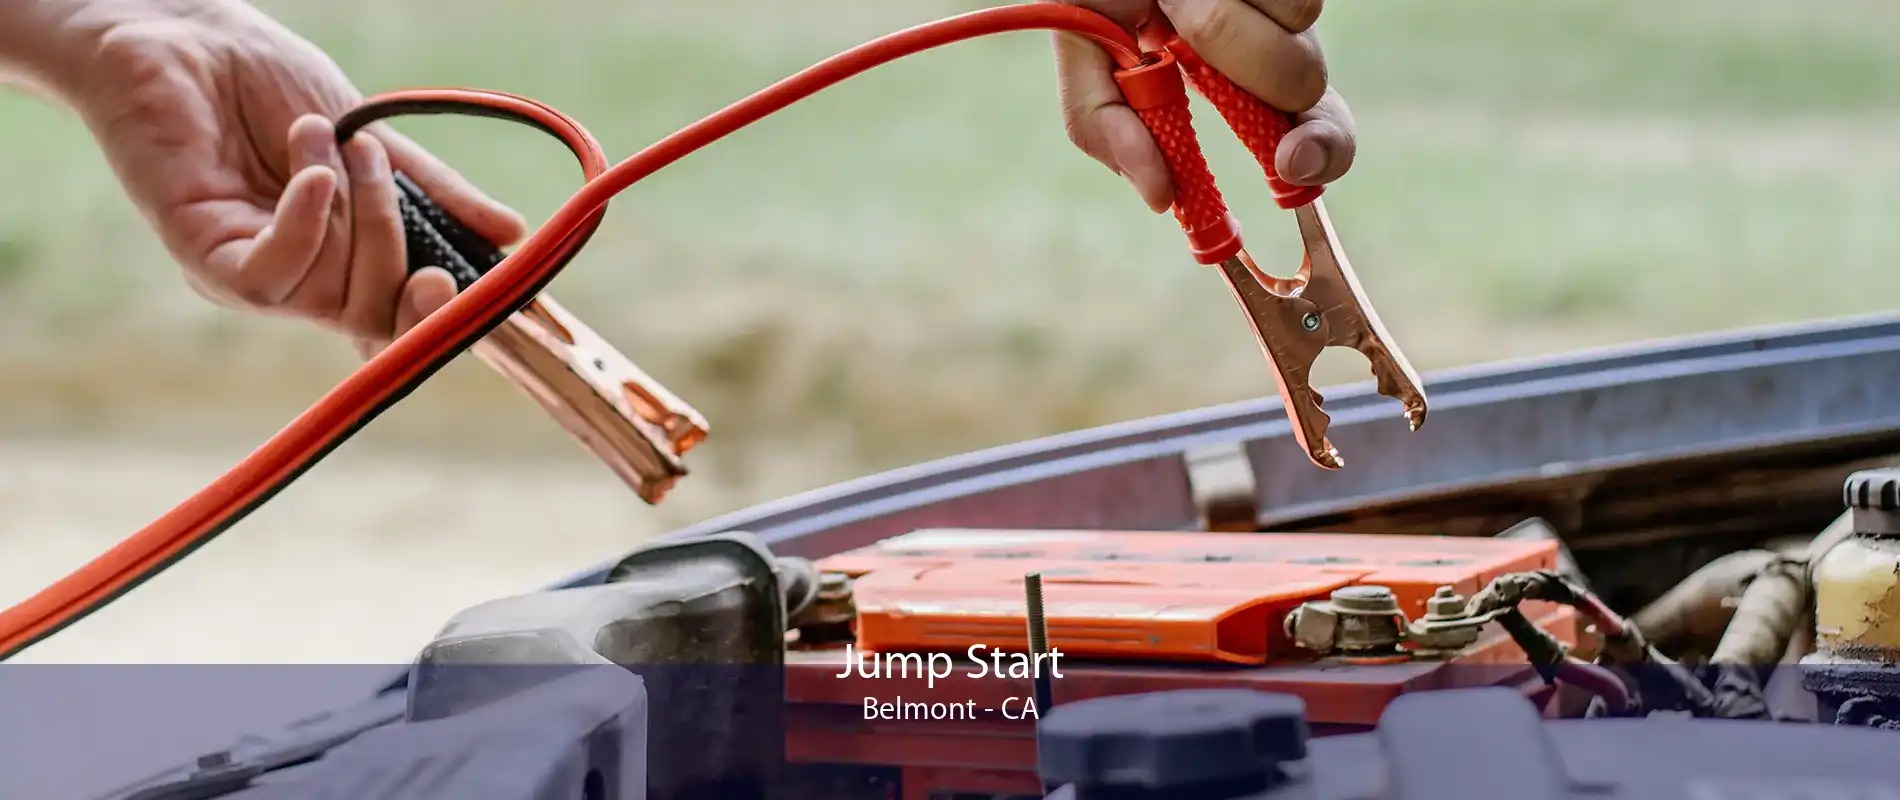 Jump Start Belmont - CA